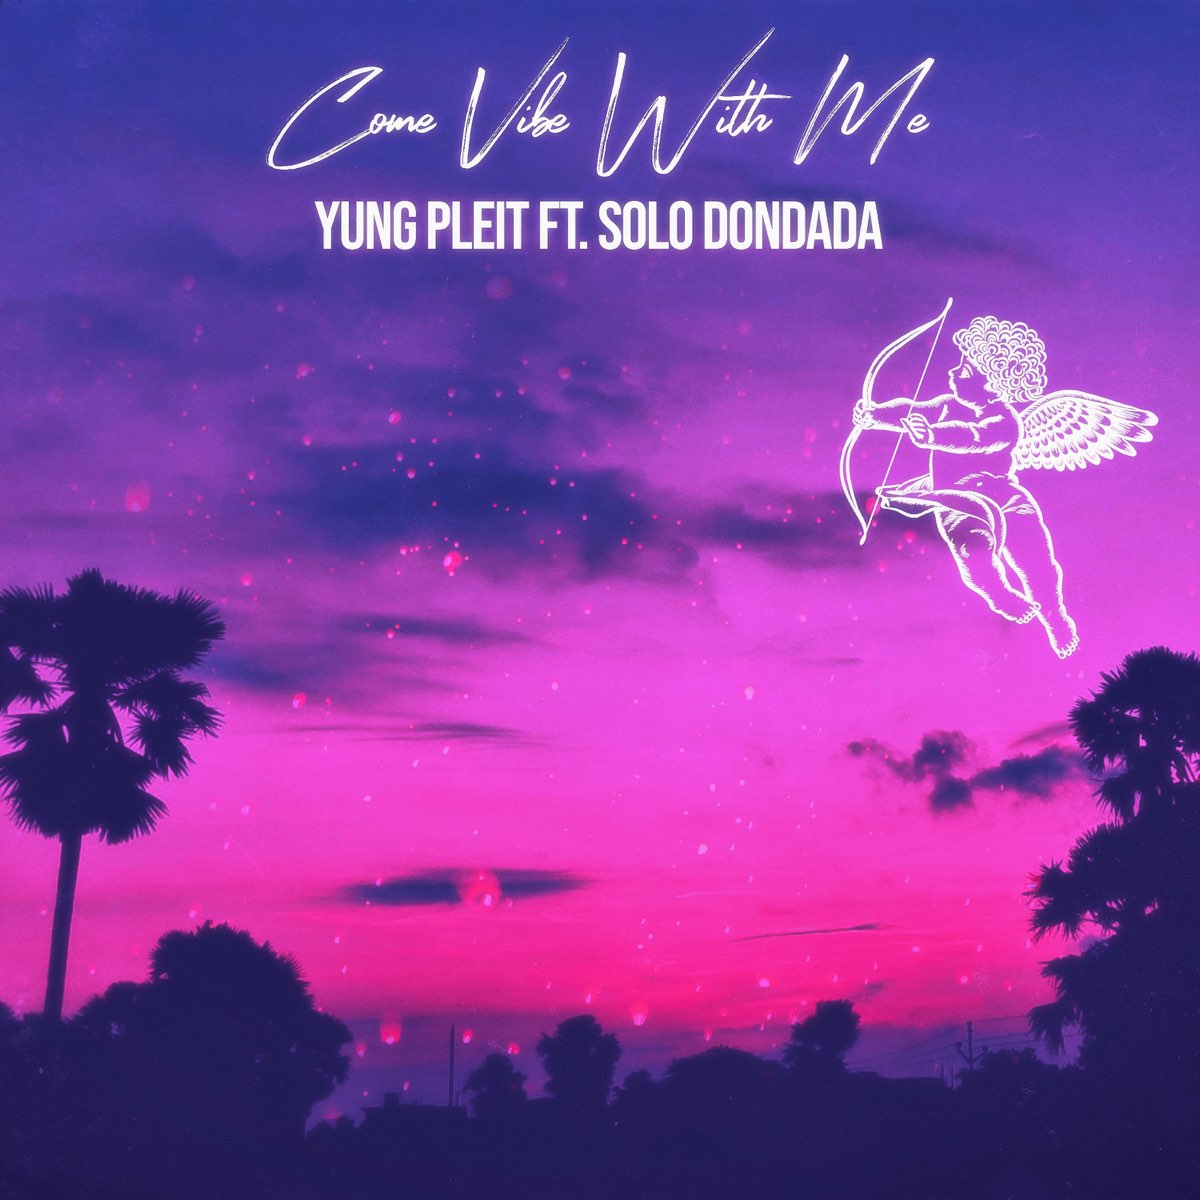 Solo Dondada) - Single by Yung Pleit on Apple Music.